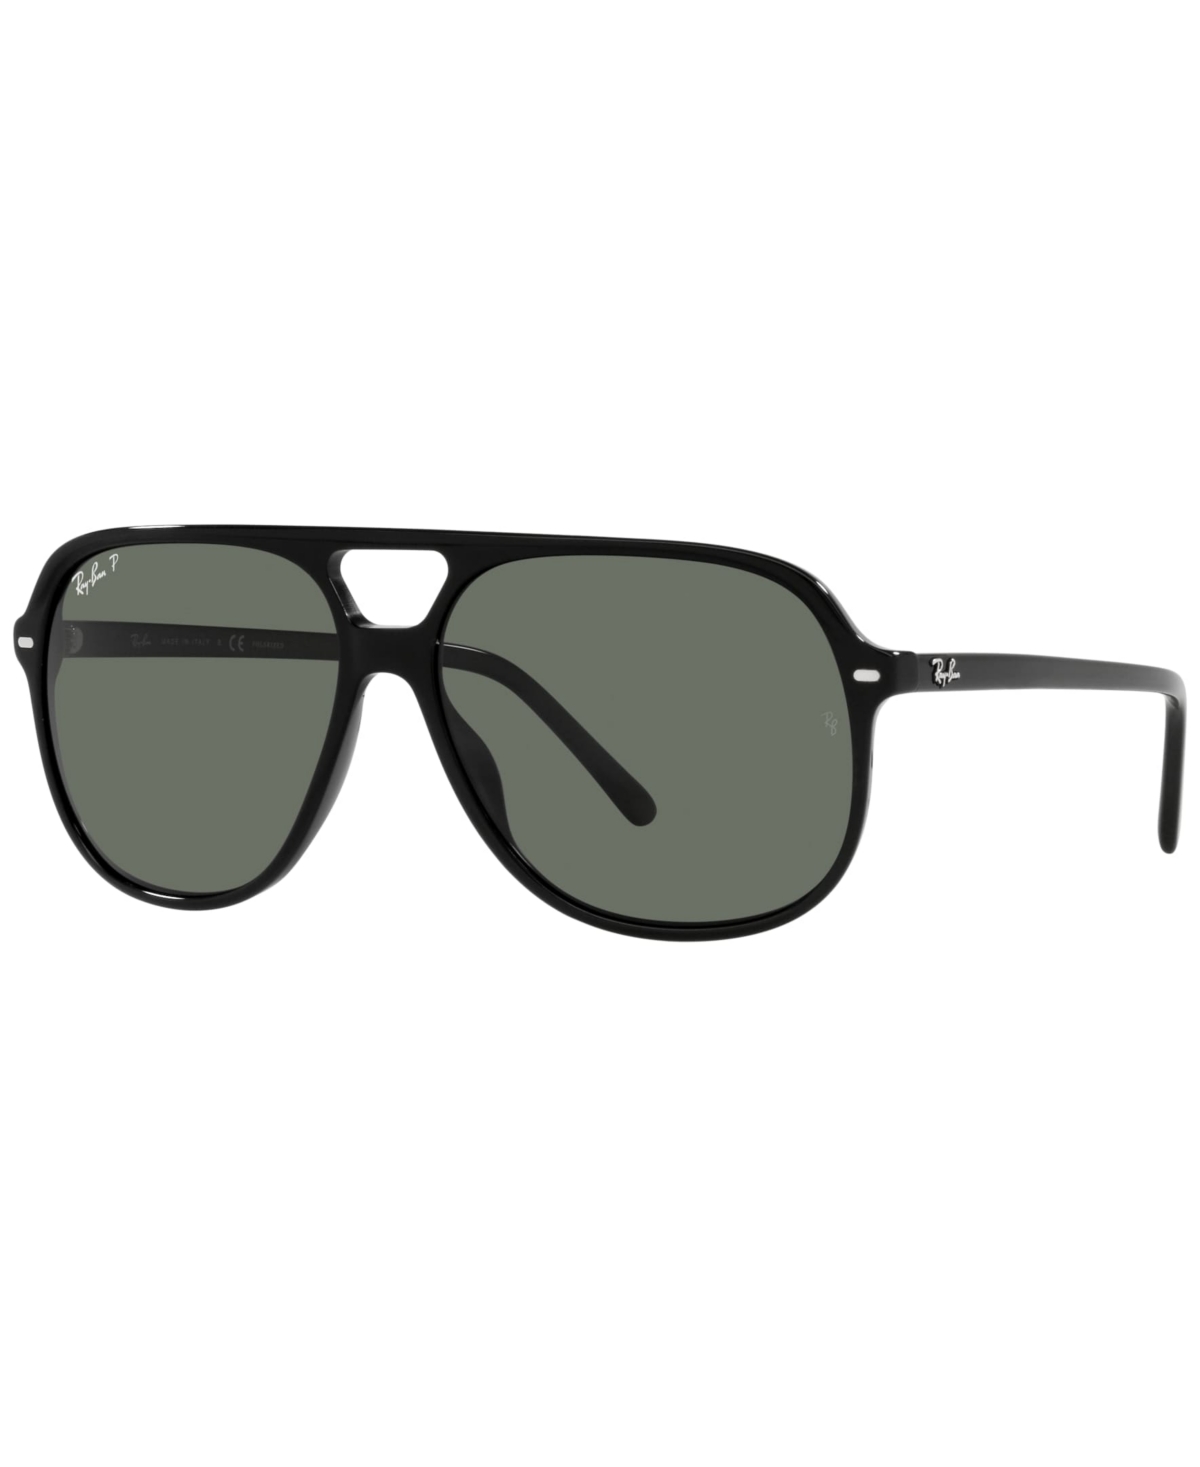 Ray Ban Unisex Polarized Sunglasses, Rb2198 Bill In Black